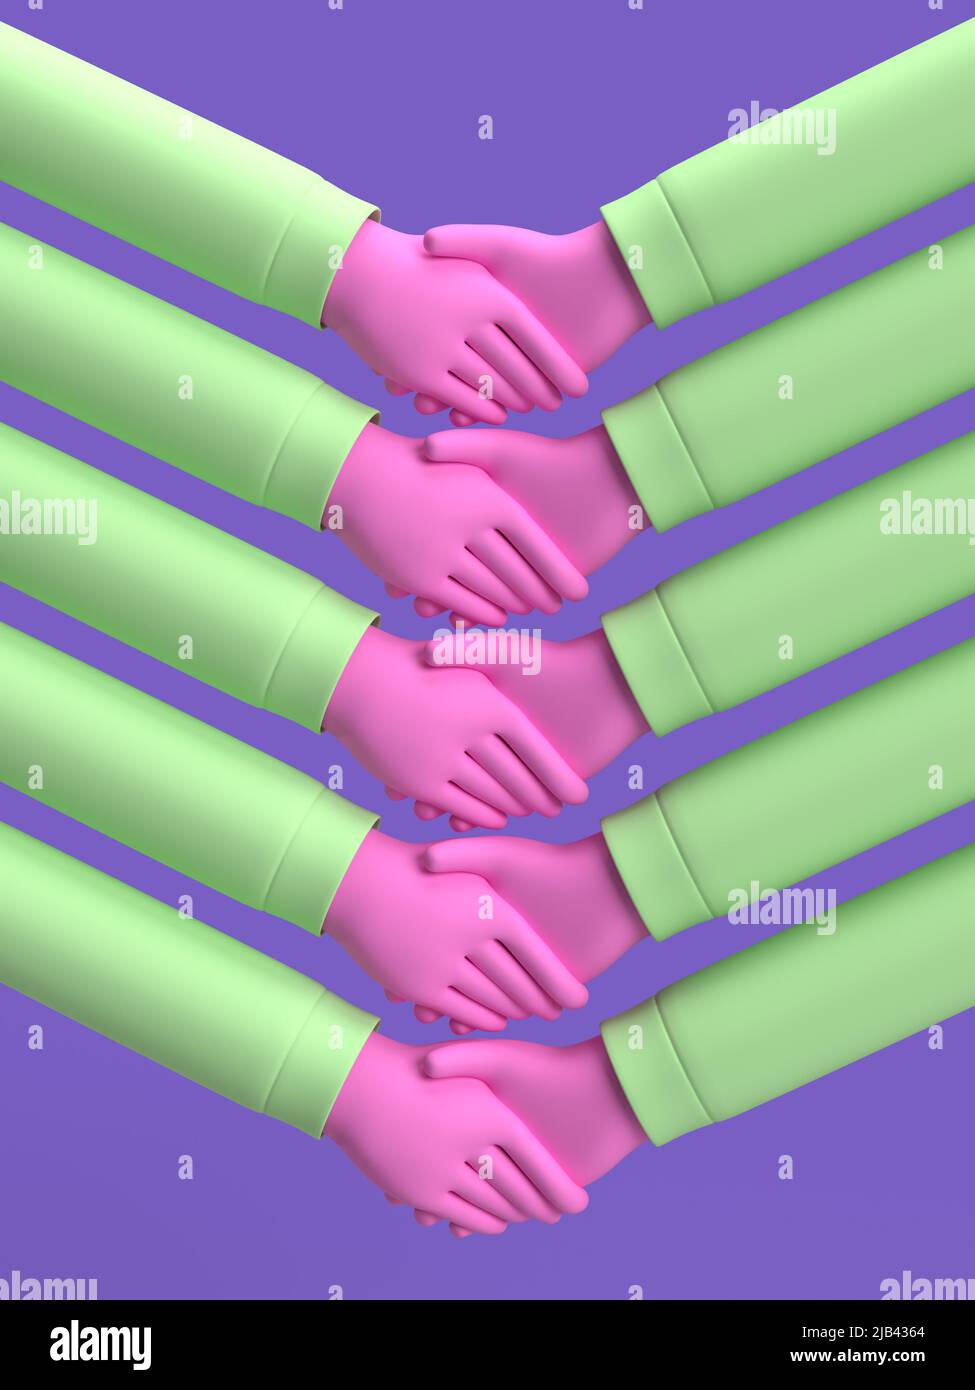 group agreement - multiple handshakes  3d illustration Stock Photo